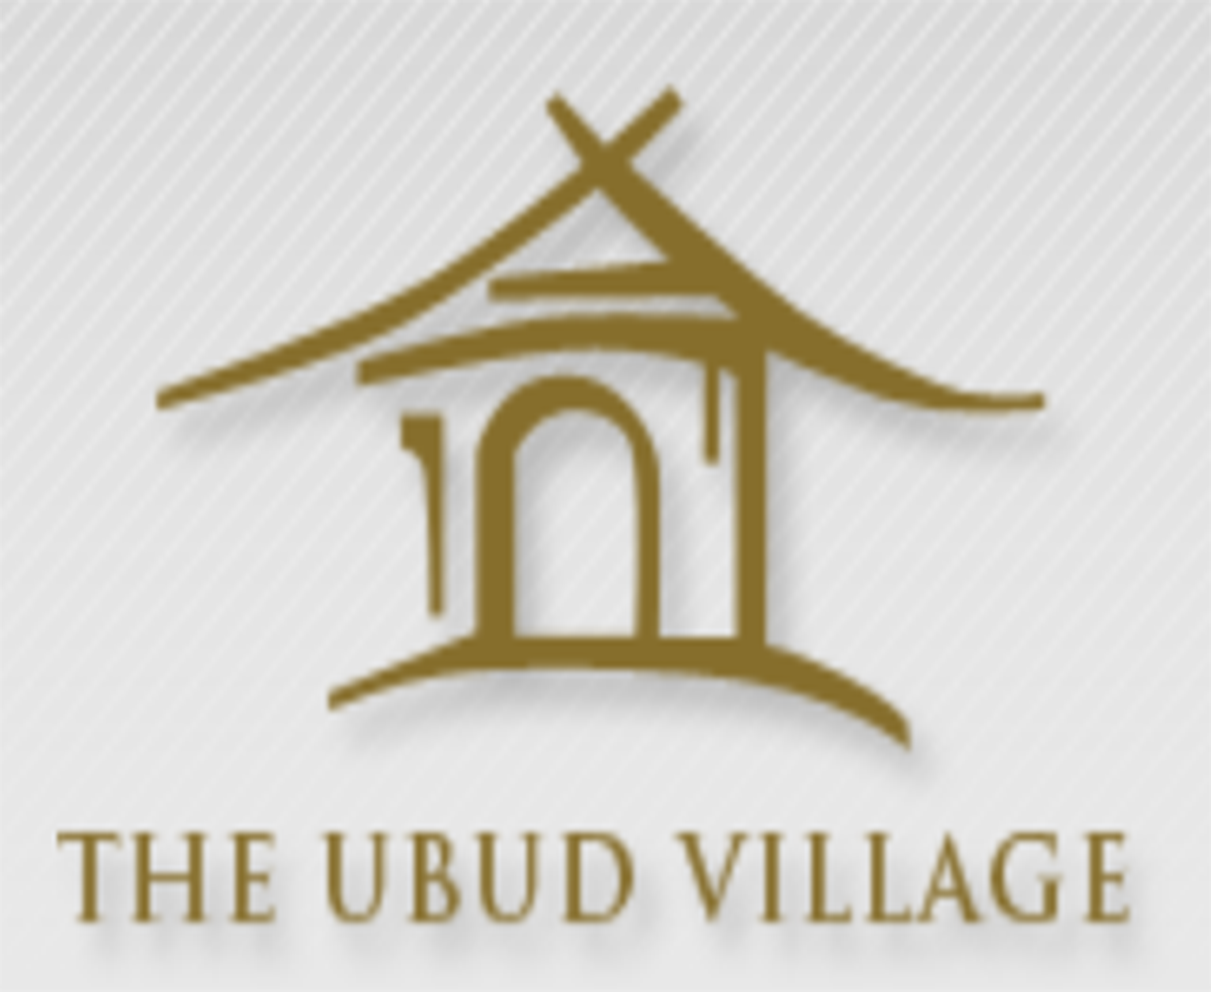 
The Ubud Village Resort & Spa